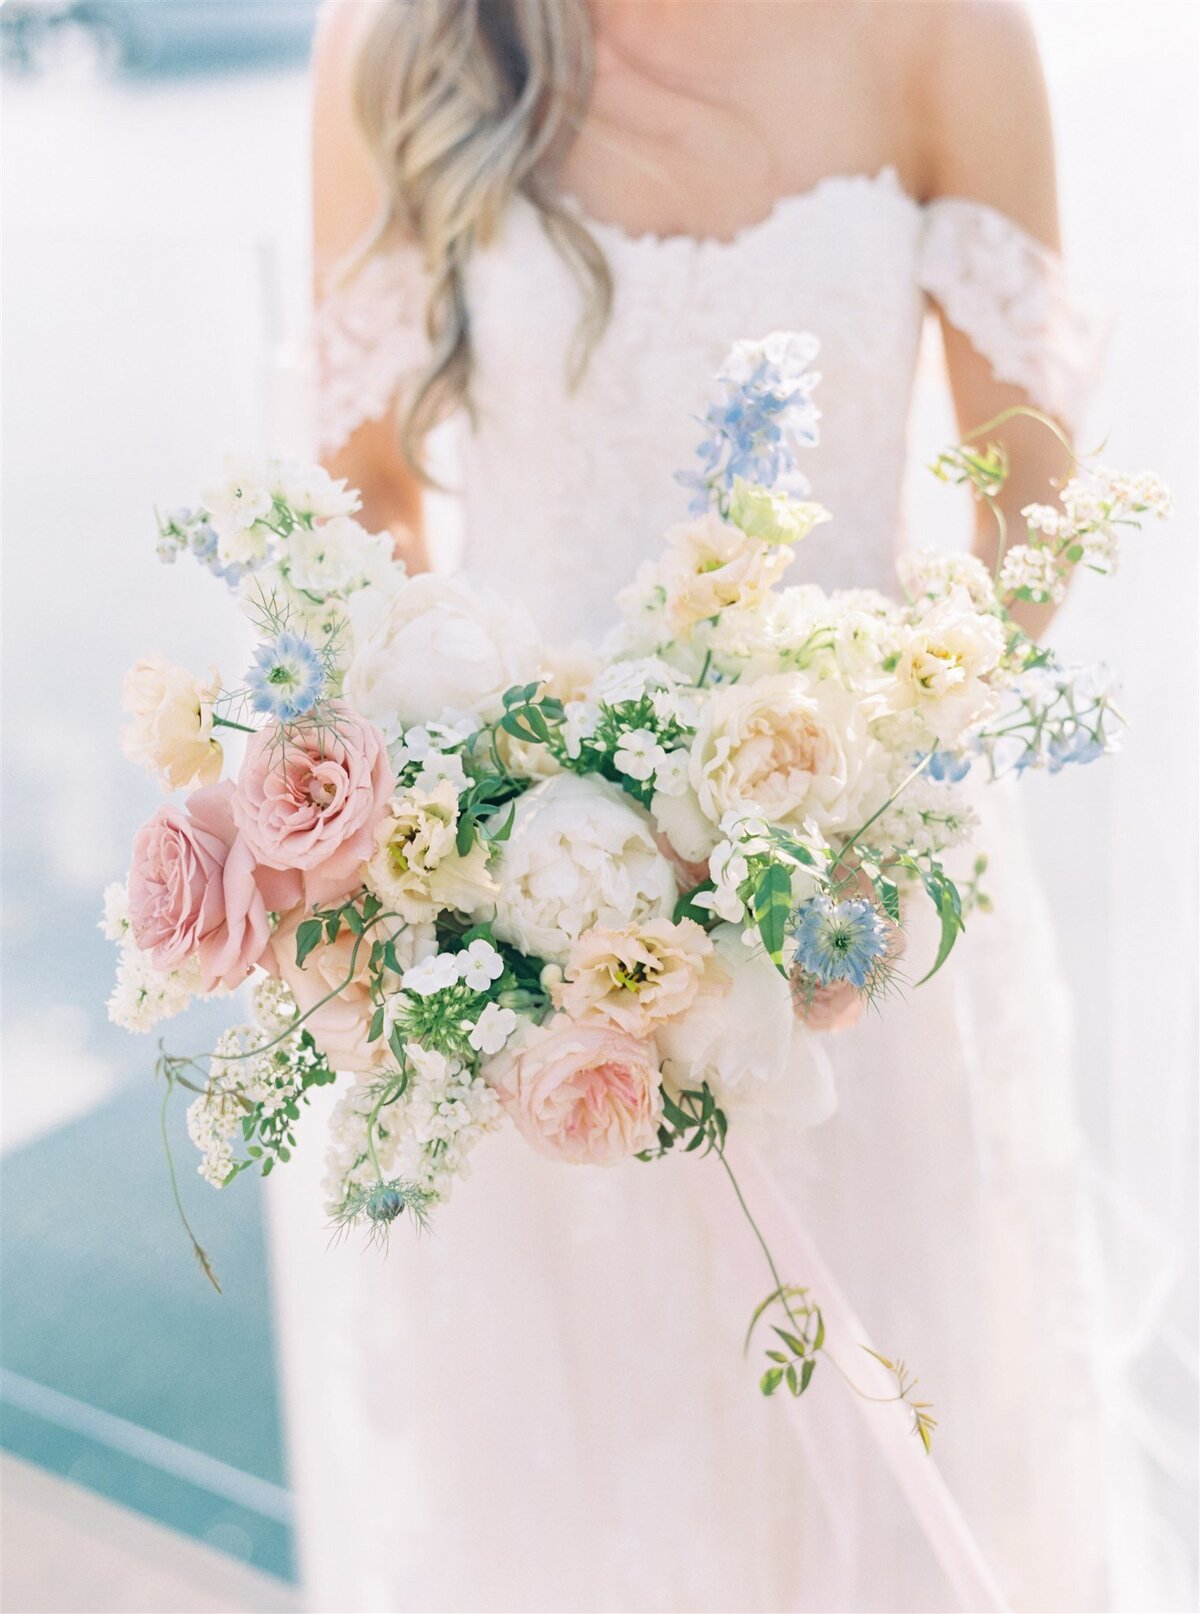 Kate-Murtaugh-Events-wedding-planner-Newport-bride-spring-whimsical-bouquet